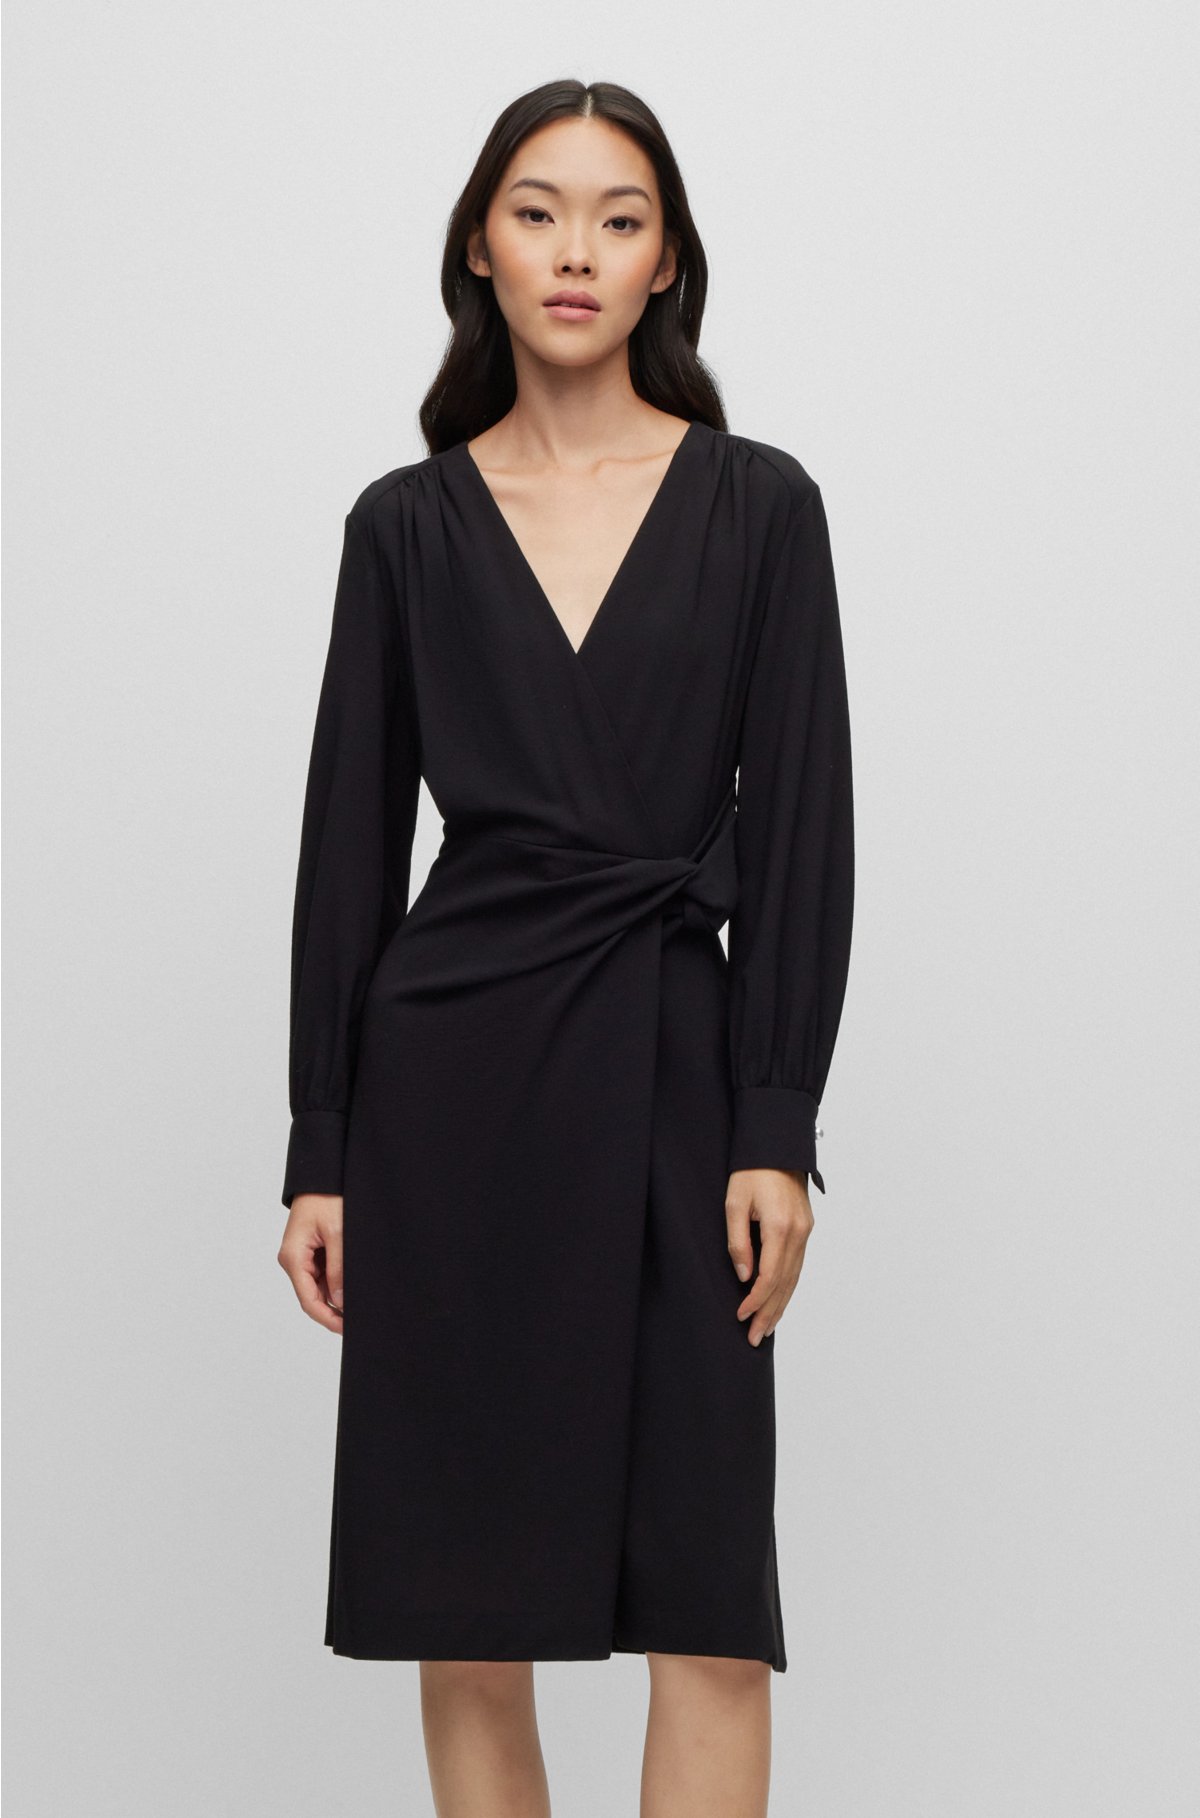 BOSS - Wool-blend slim-fit dress with twist front